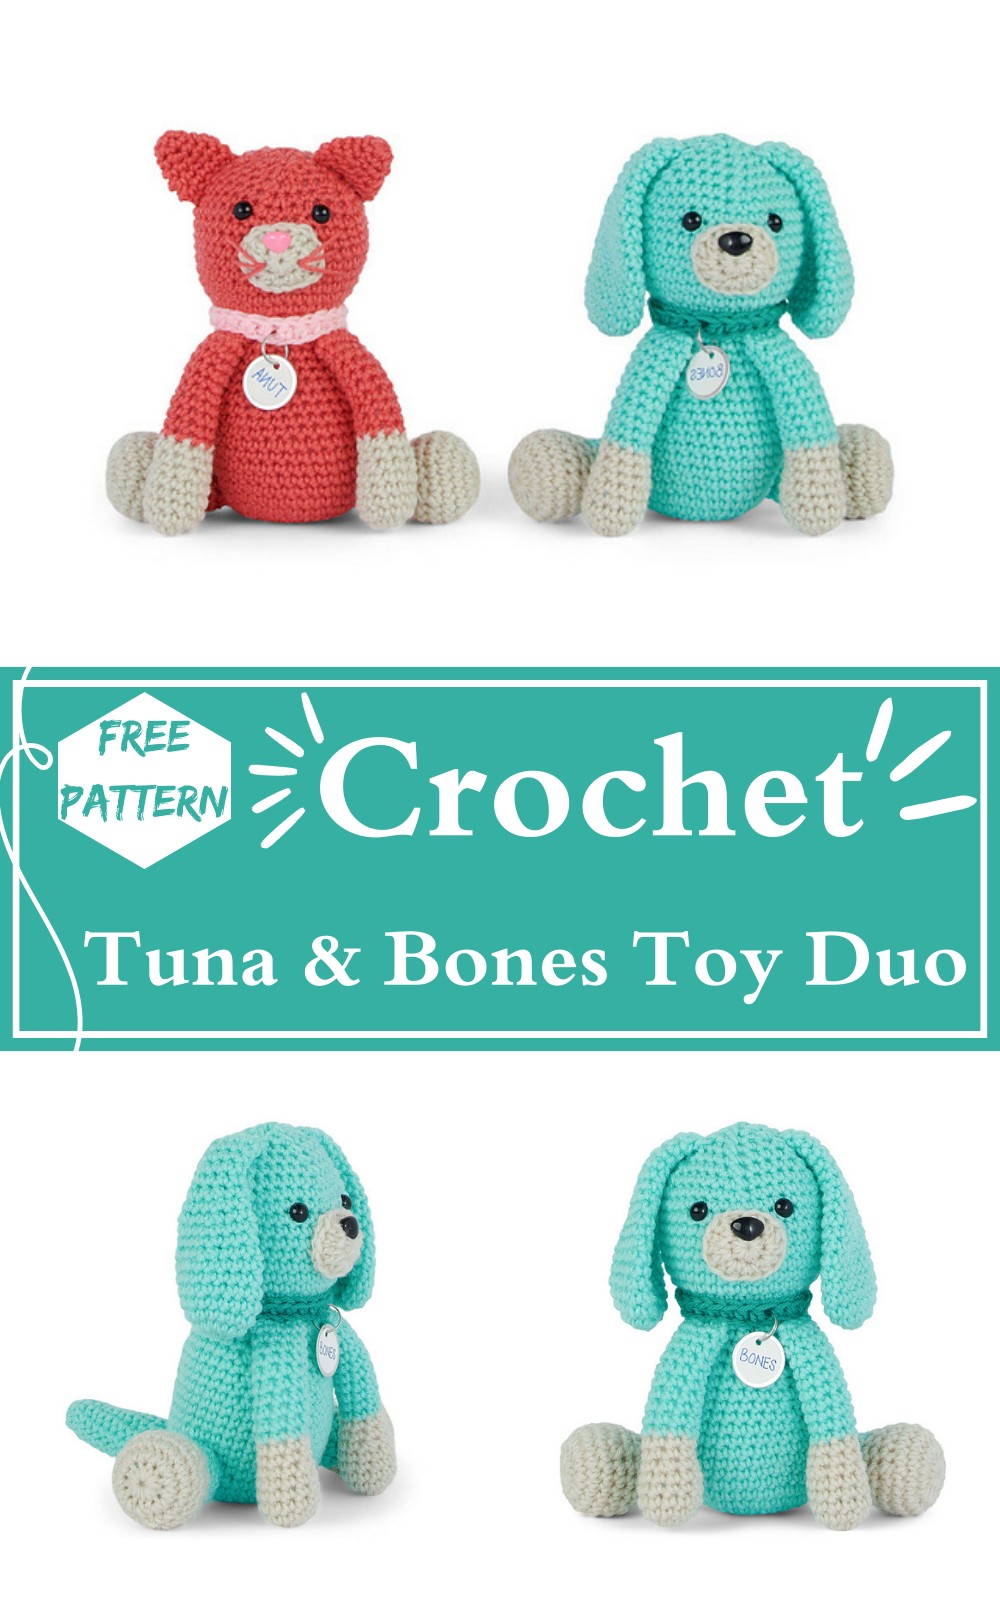 Crochet Tuna & Bones Toy Duo